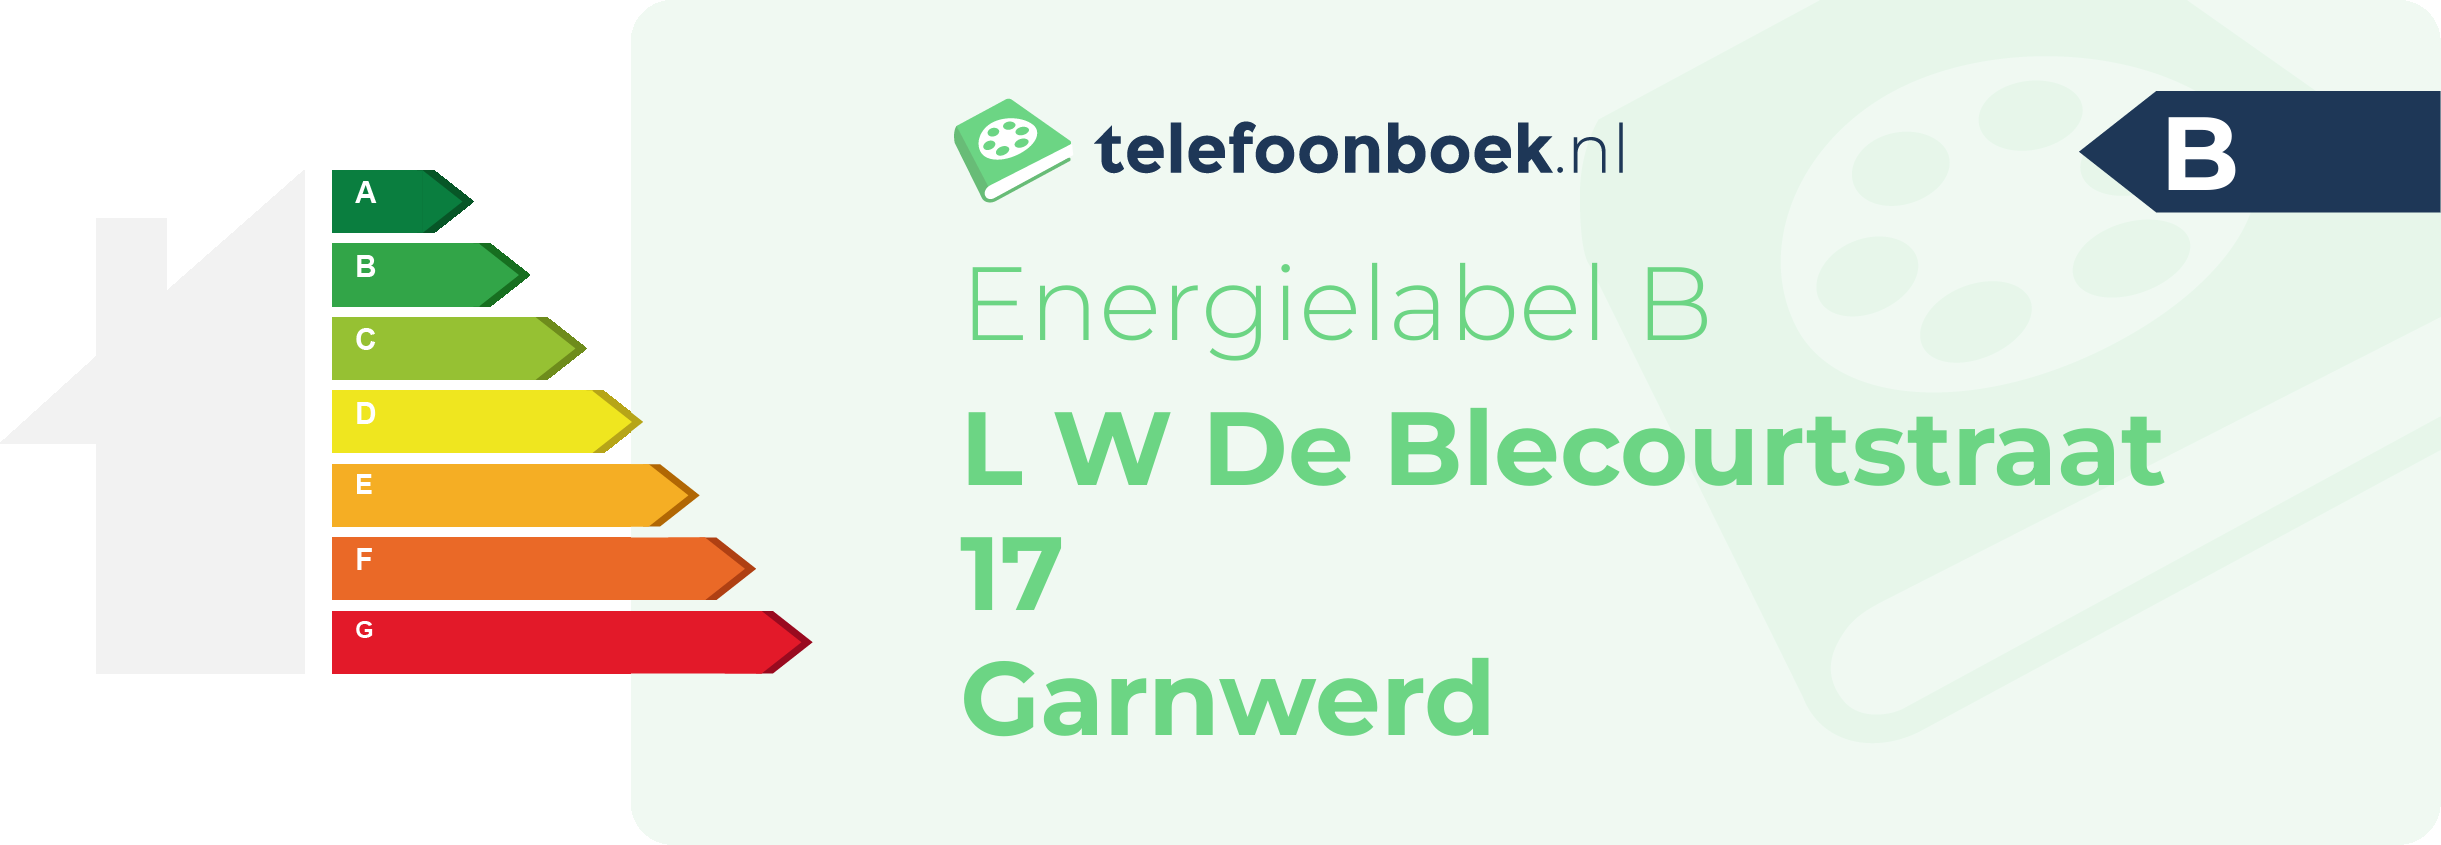 Energielabel L W De Blecourtstraat 17 Garnwerd